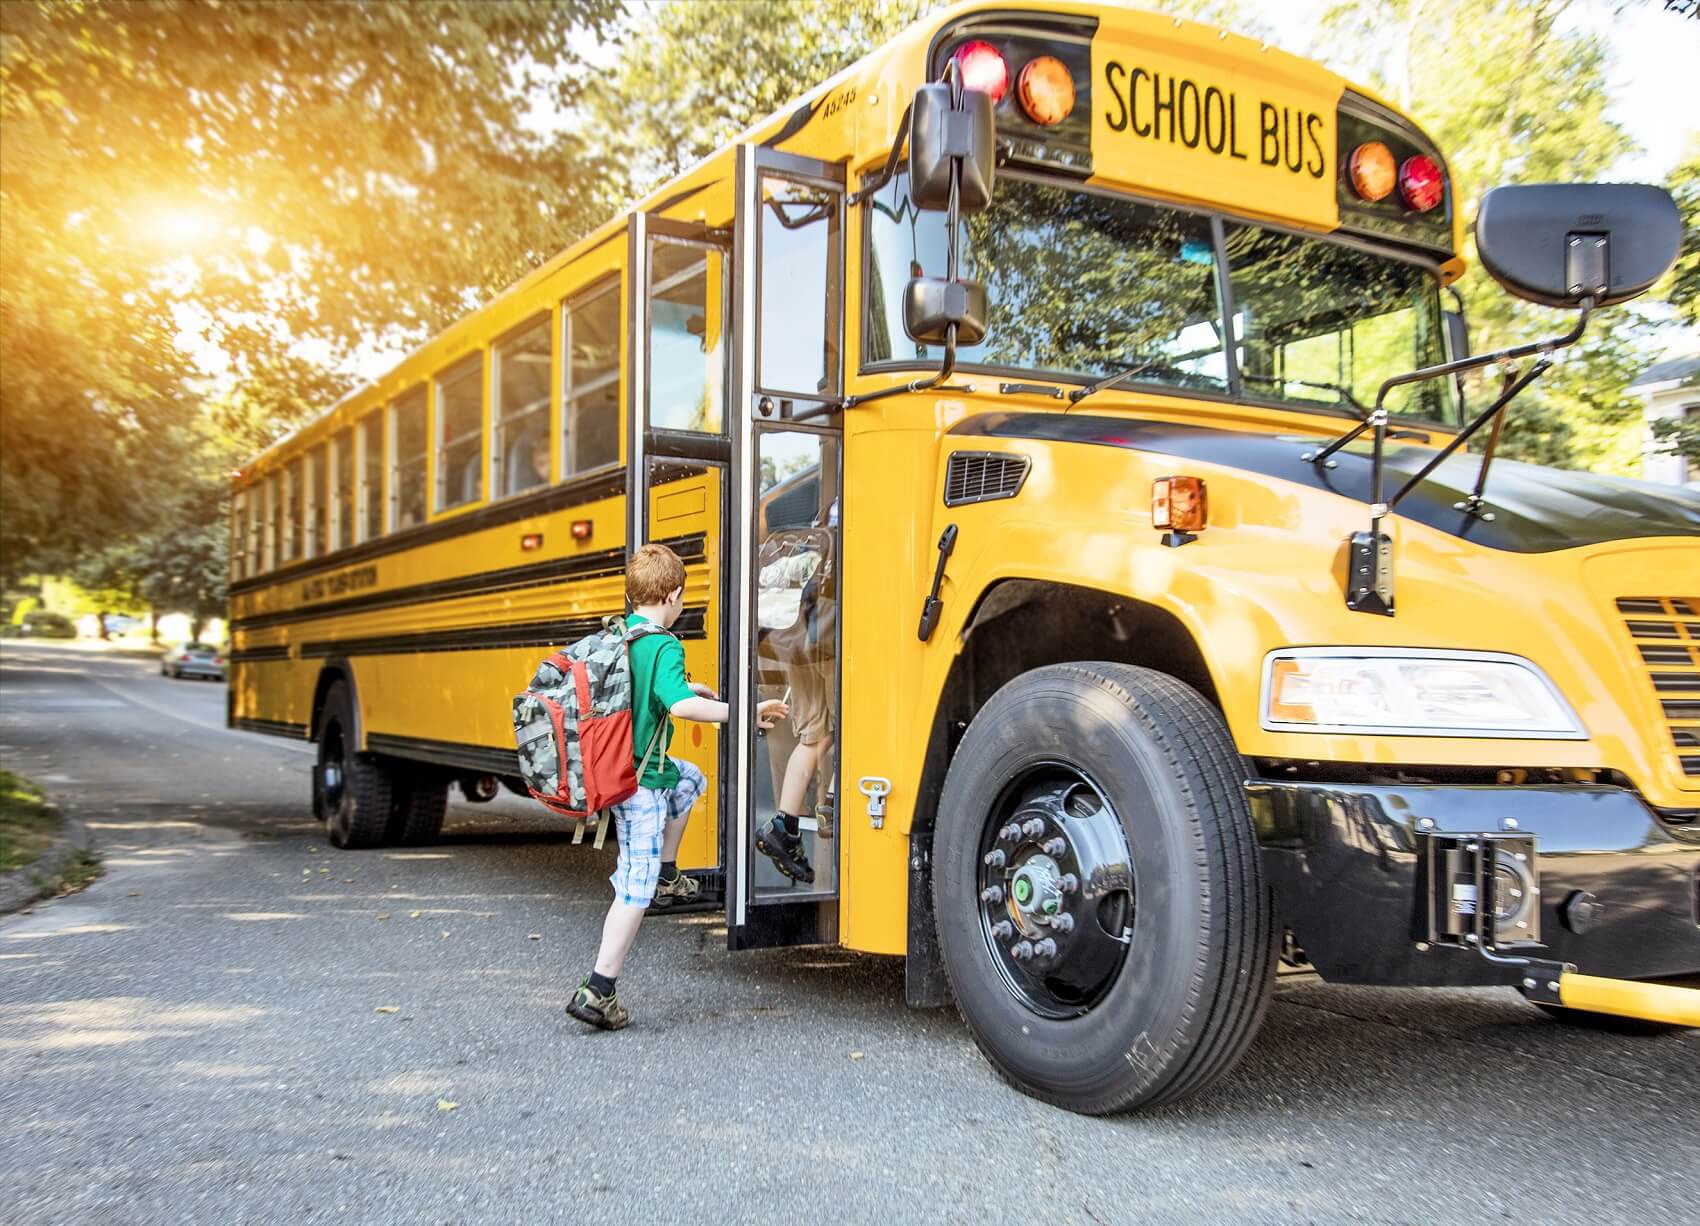 In-vehicle Wi-Fi on school buses